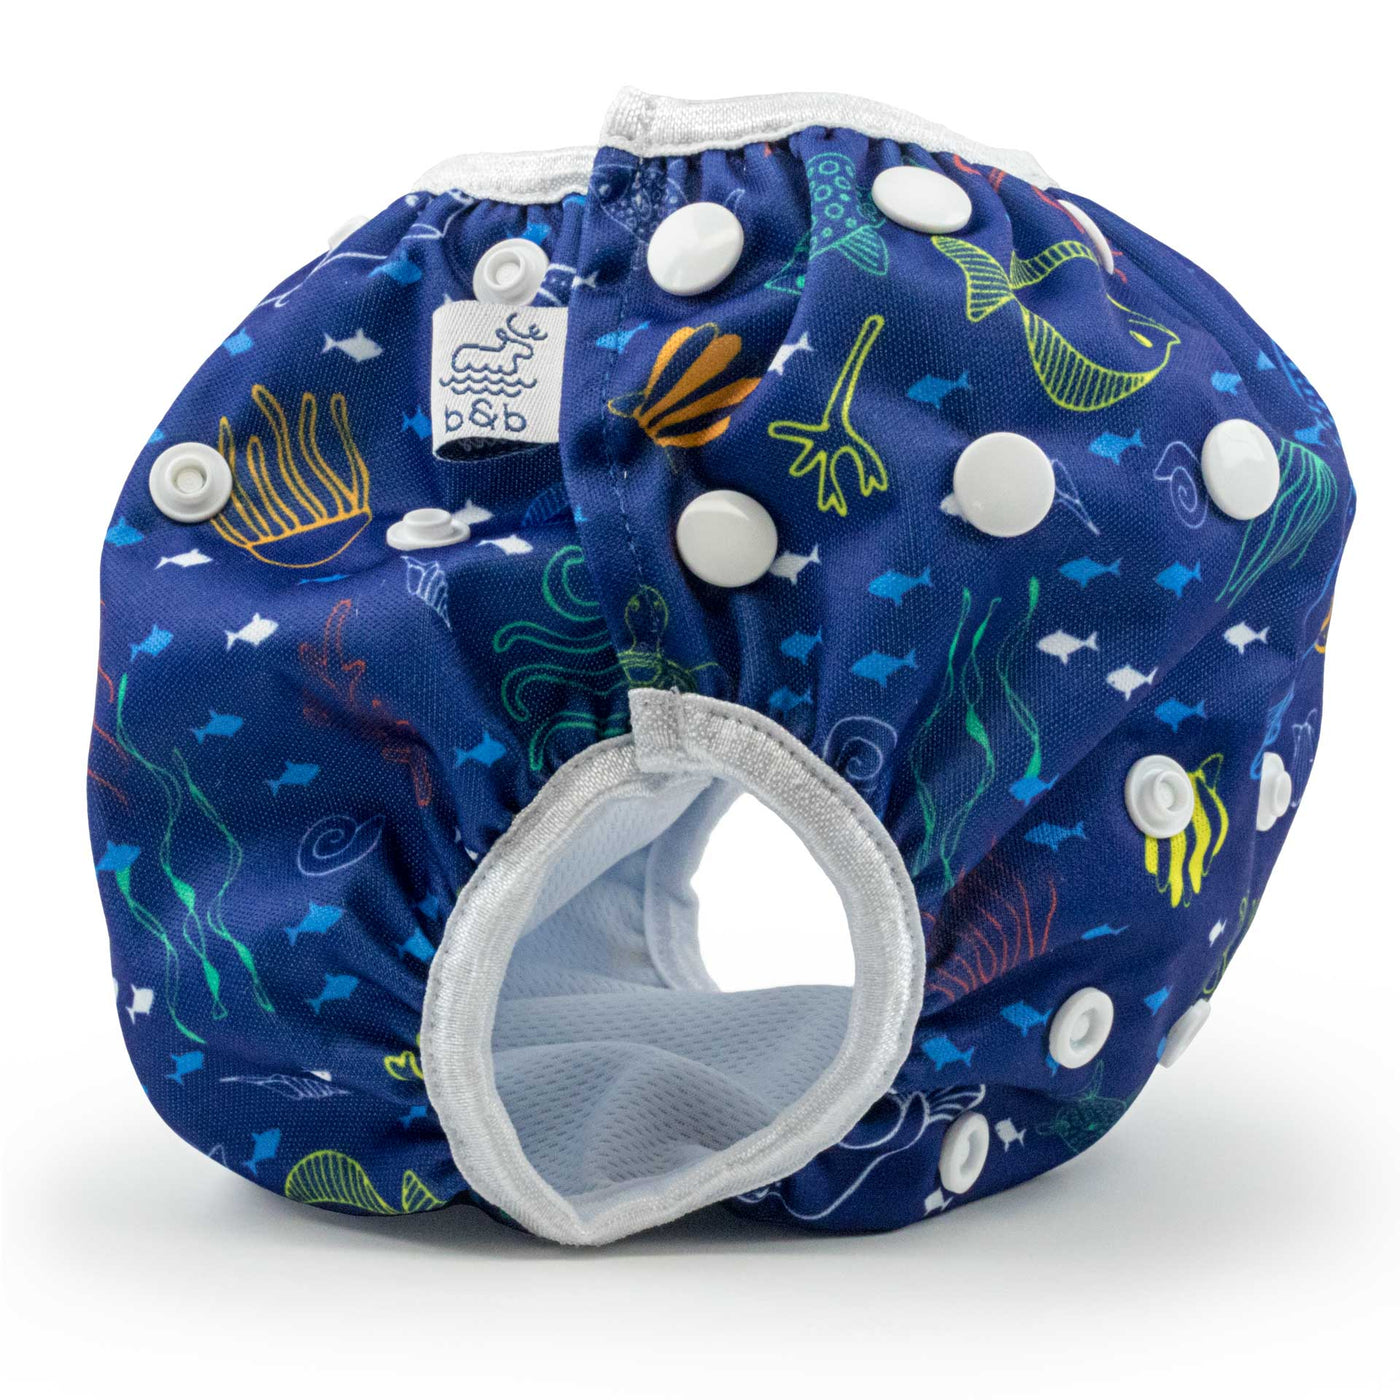 Sea Friends Nageuret Premium Reusable Swim Diaper, Adjustable 0-3 Years